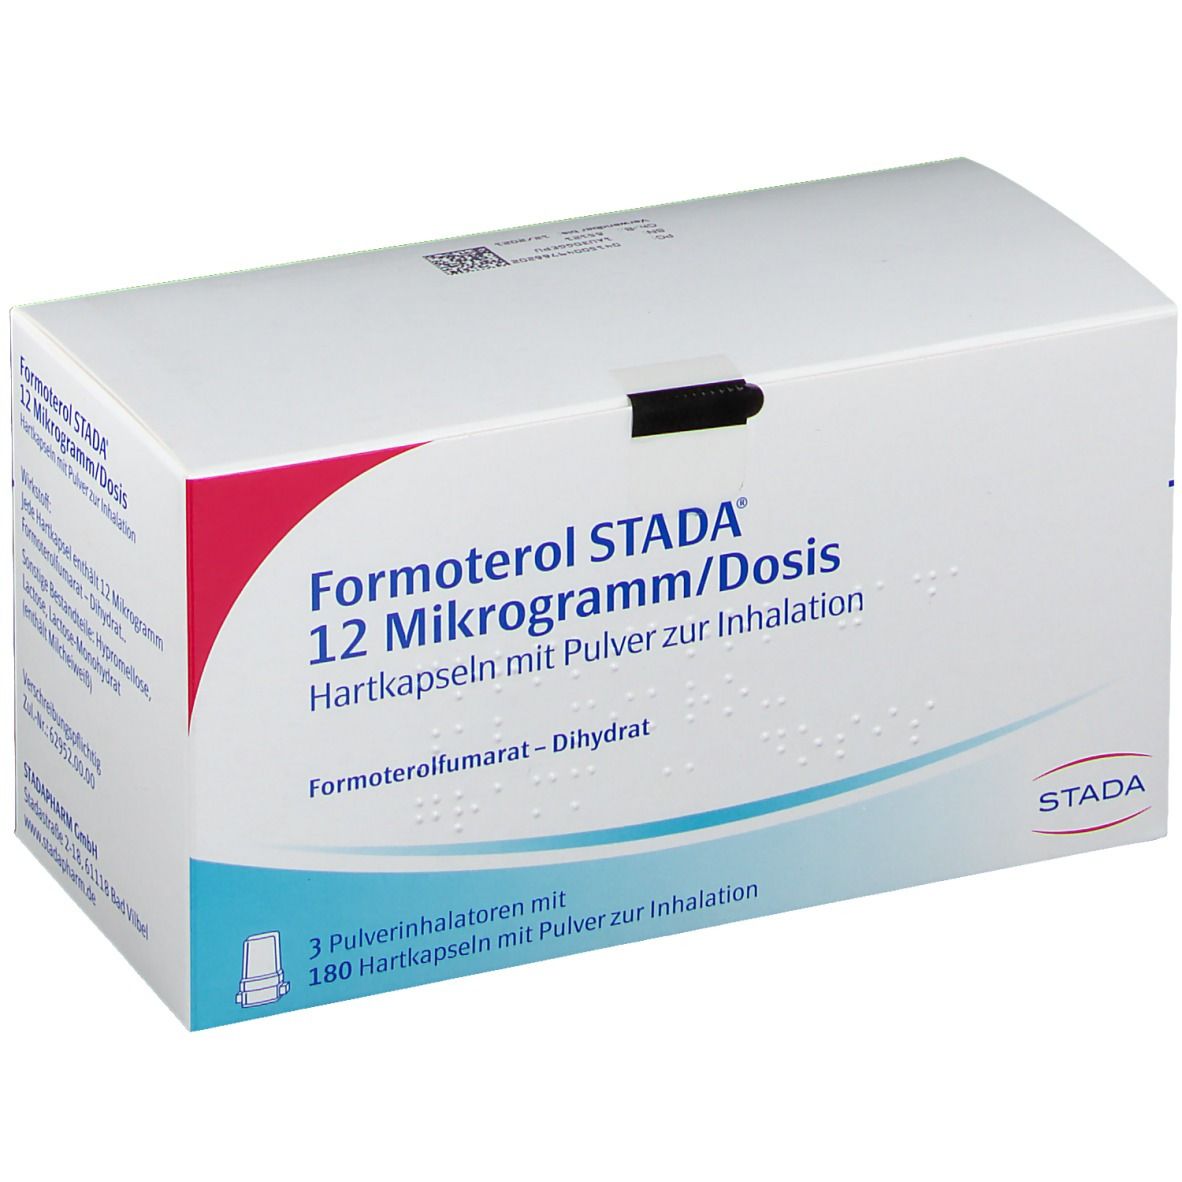 Formoterol STADA® 12 Mikrogramm/Dosis